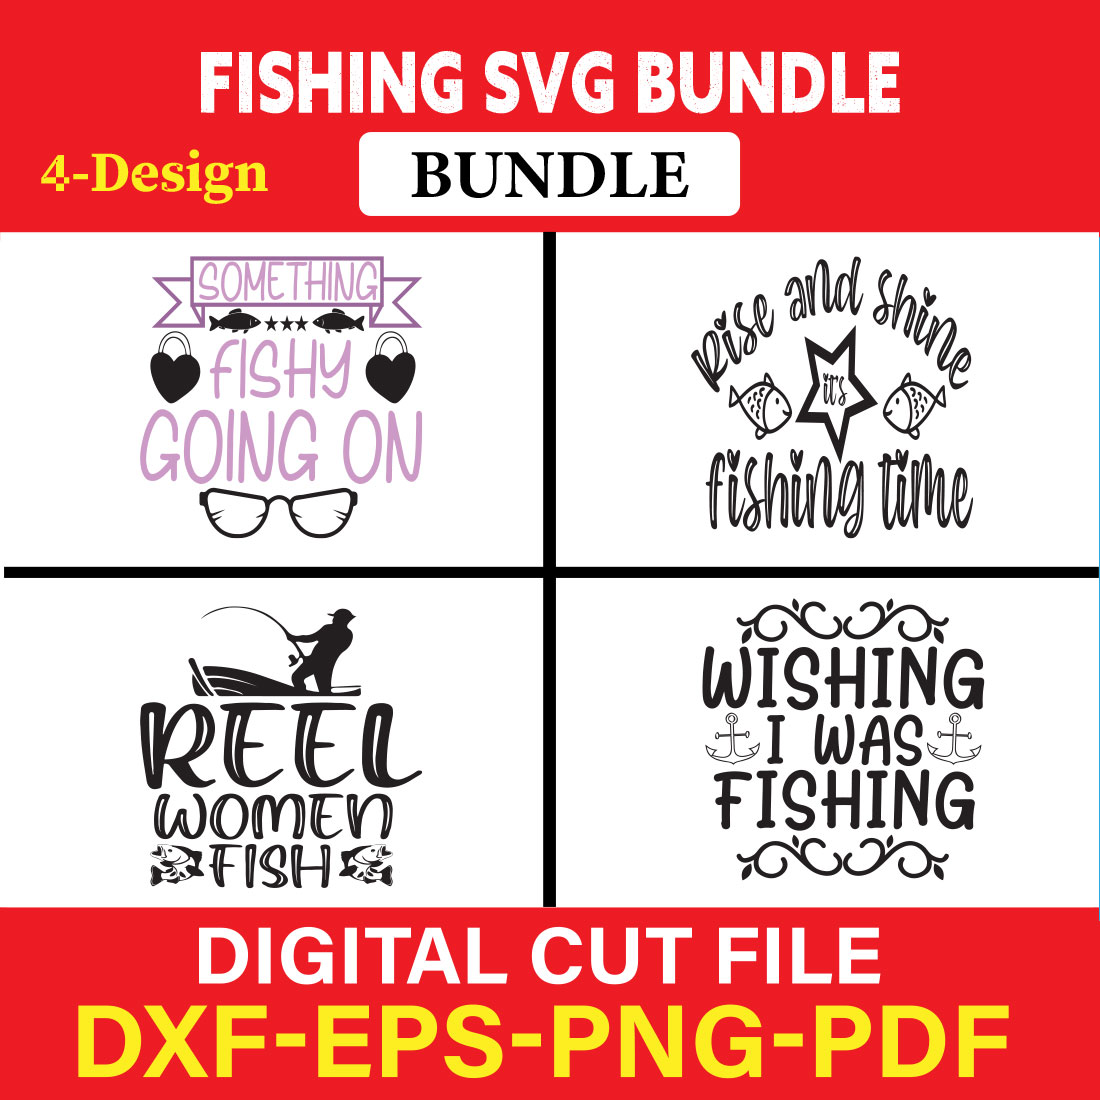 Fishing T-shirt Design Bundle Vol-10 cover image.